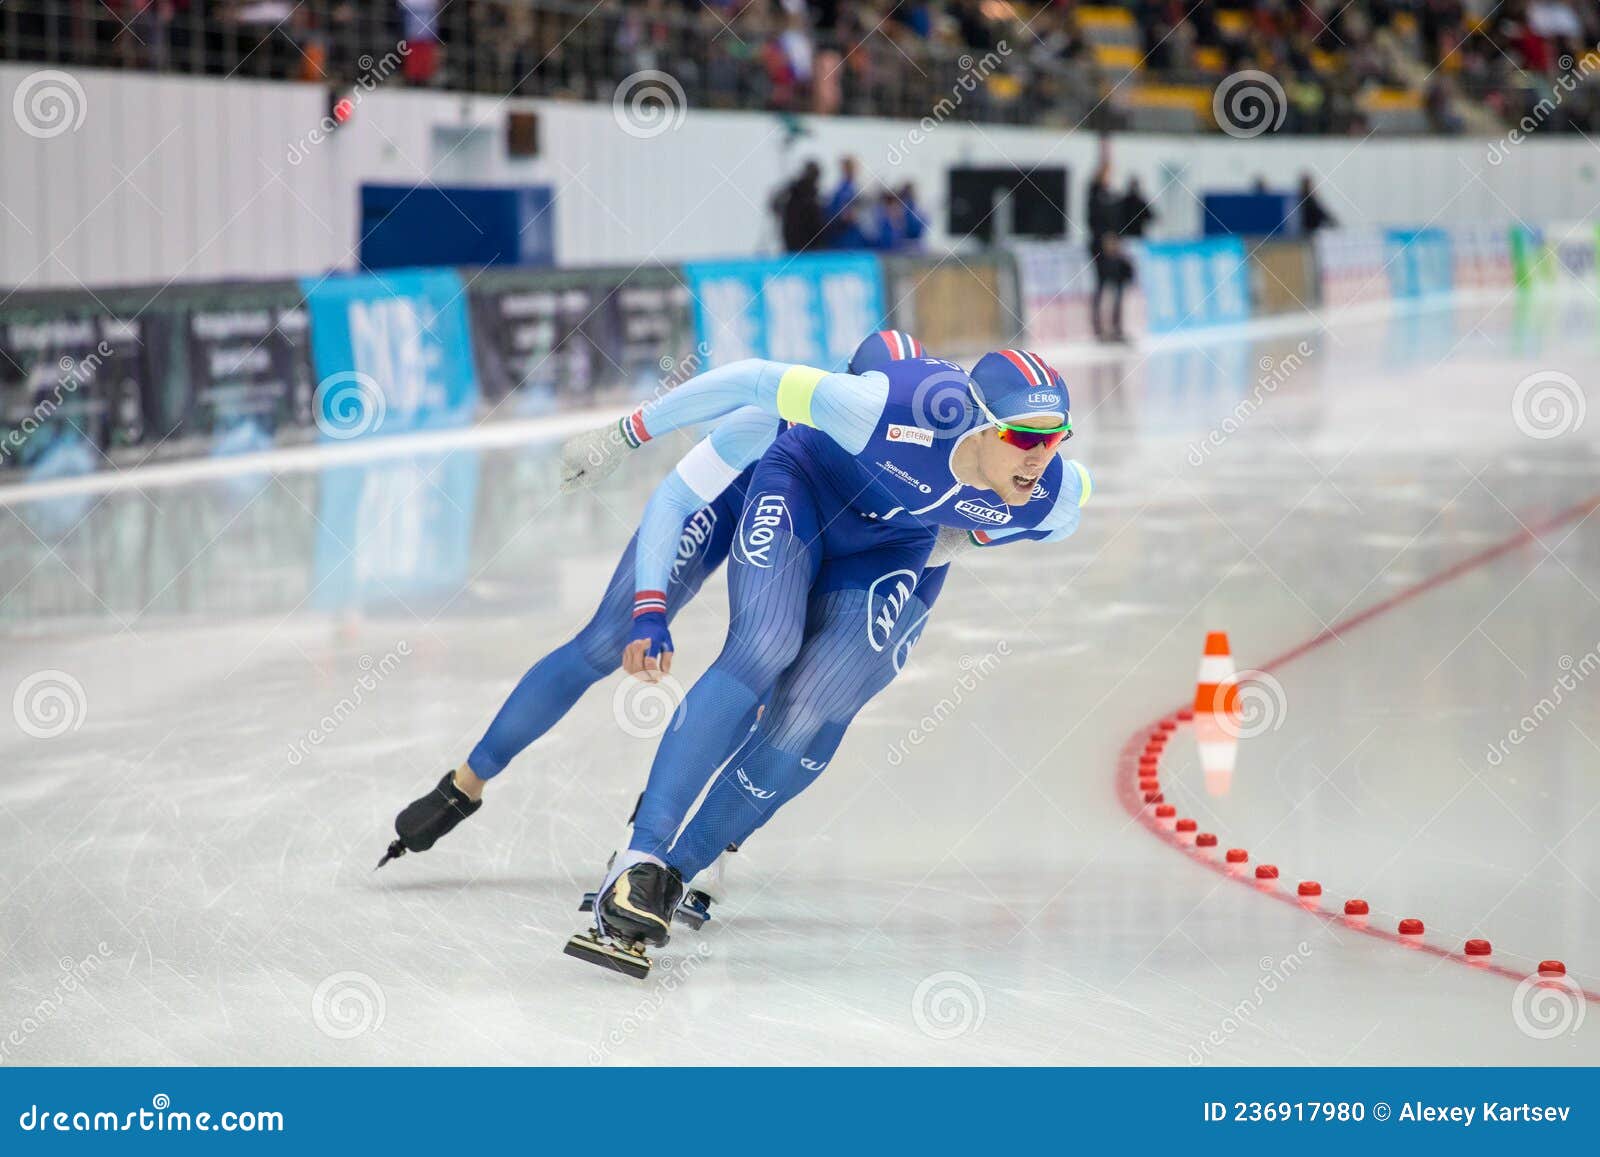 ISU European Speed Skating Championships. Athlete on Ice. Classic Speed